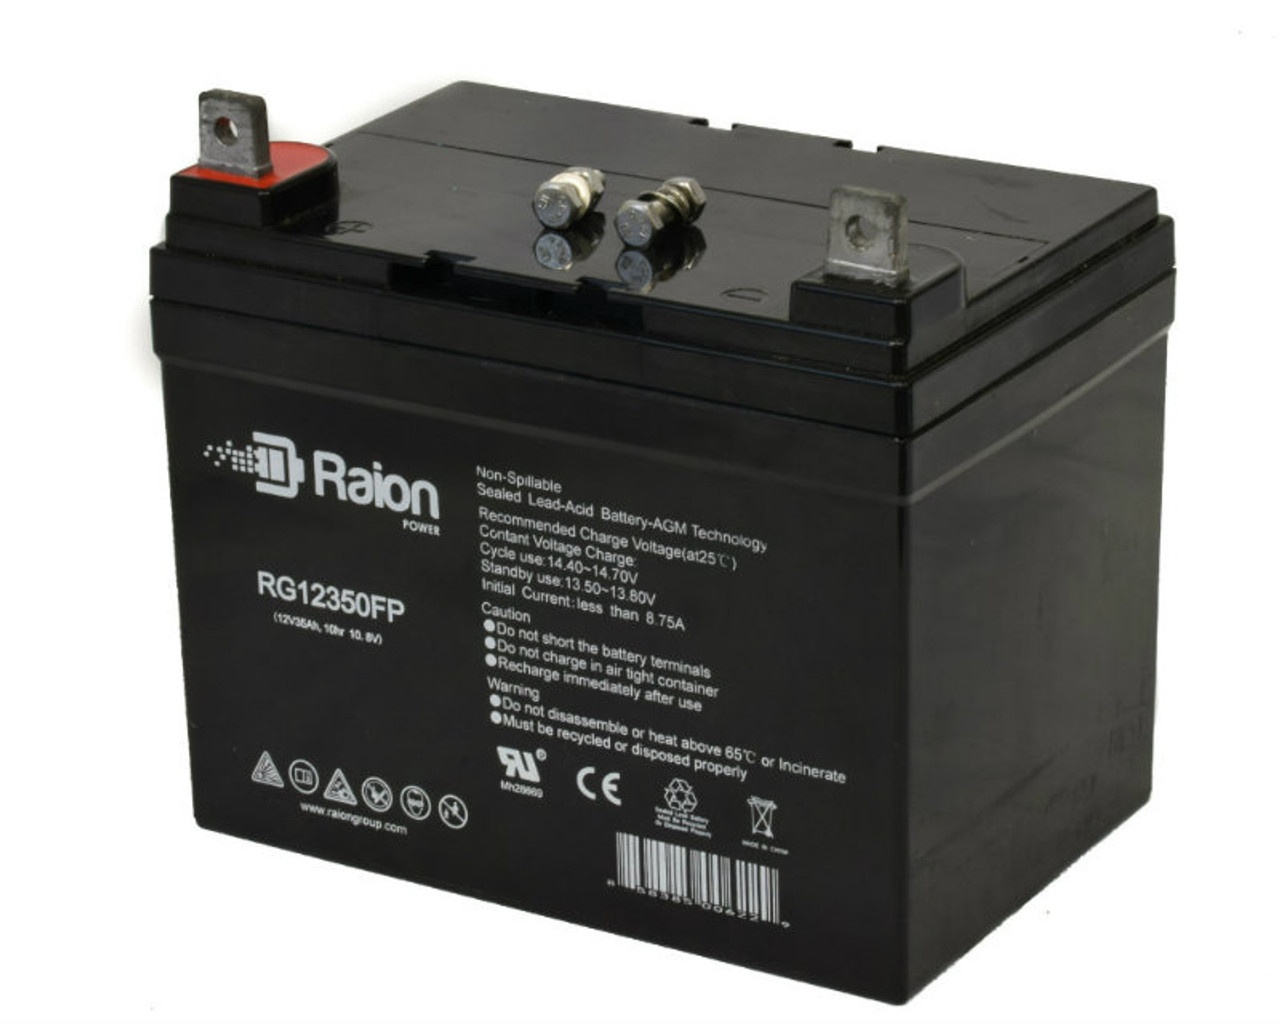 Raion Power Replacement 12V 35Ah RG12350FP Battery for John Deere 170